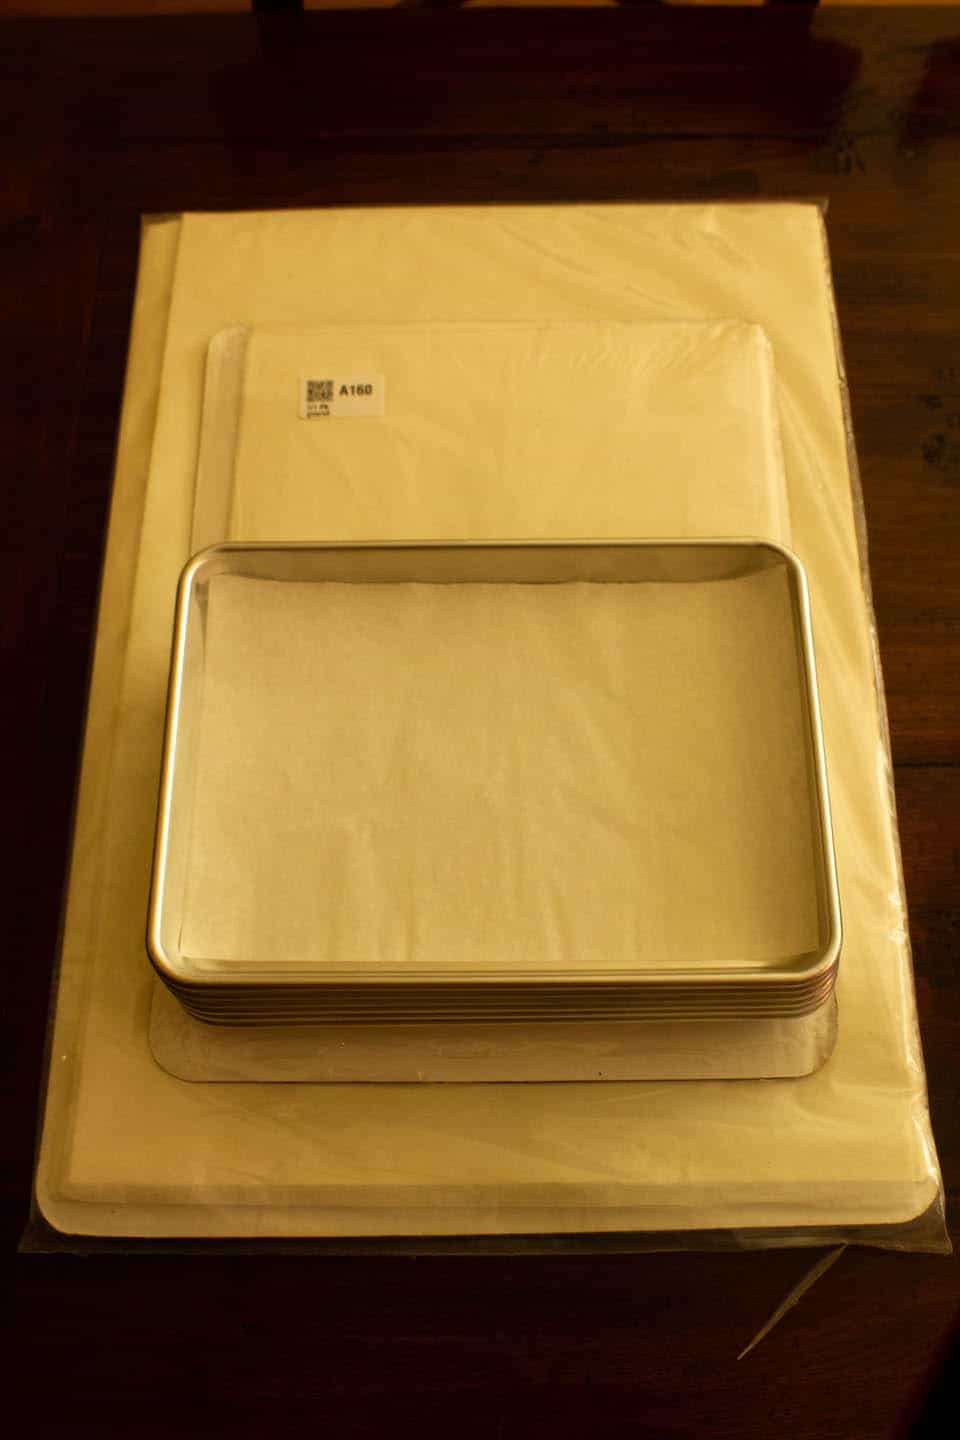 Baking Sheets- Quilon Coated Natural Parchment Paper for Sheet Pans